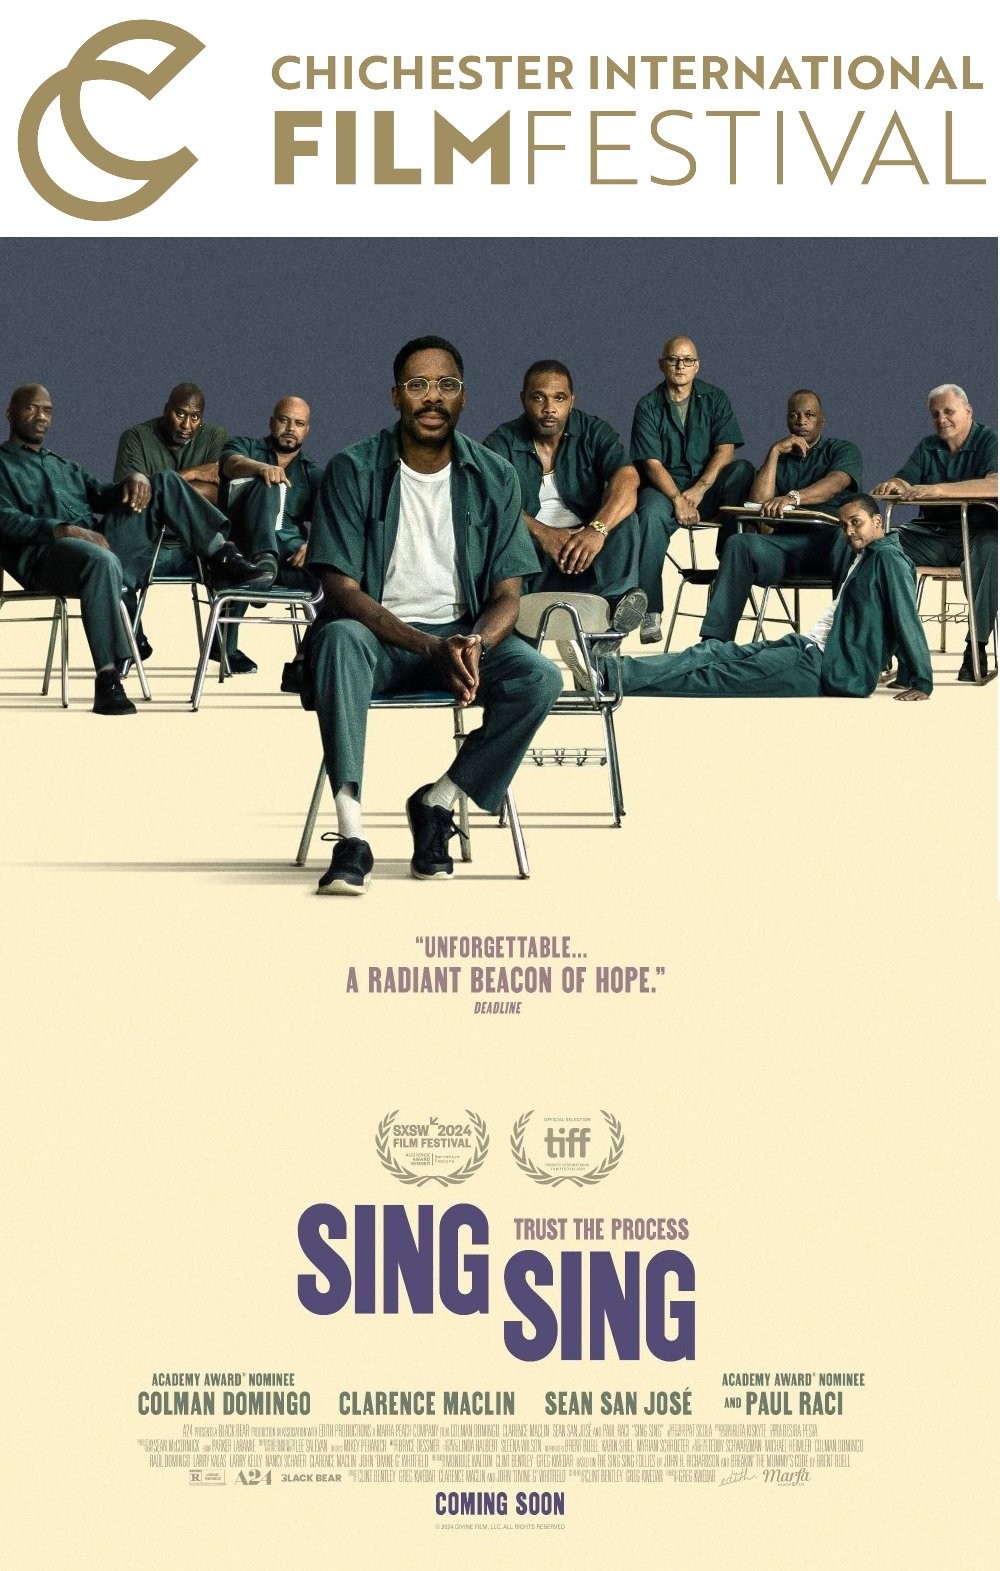 Sing Sing - Chichester International Film Festival